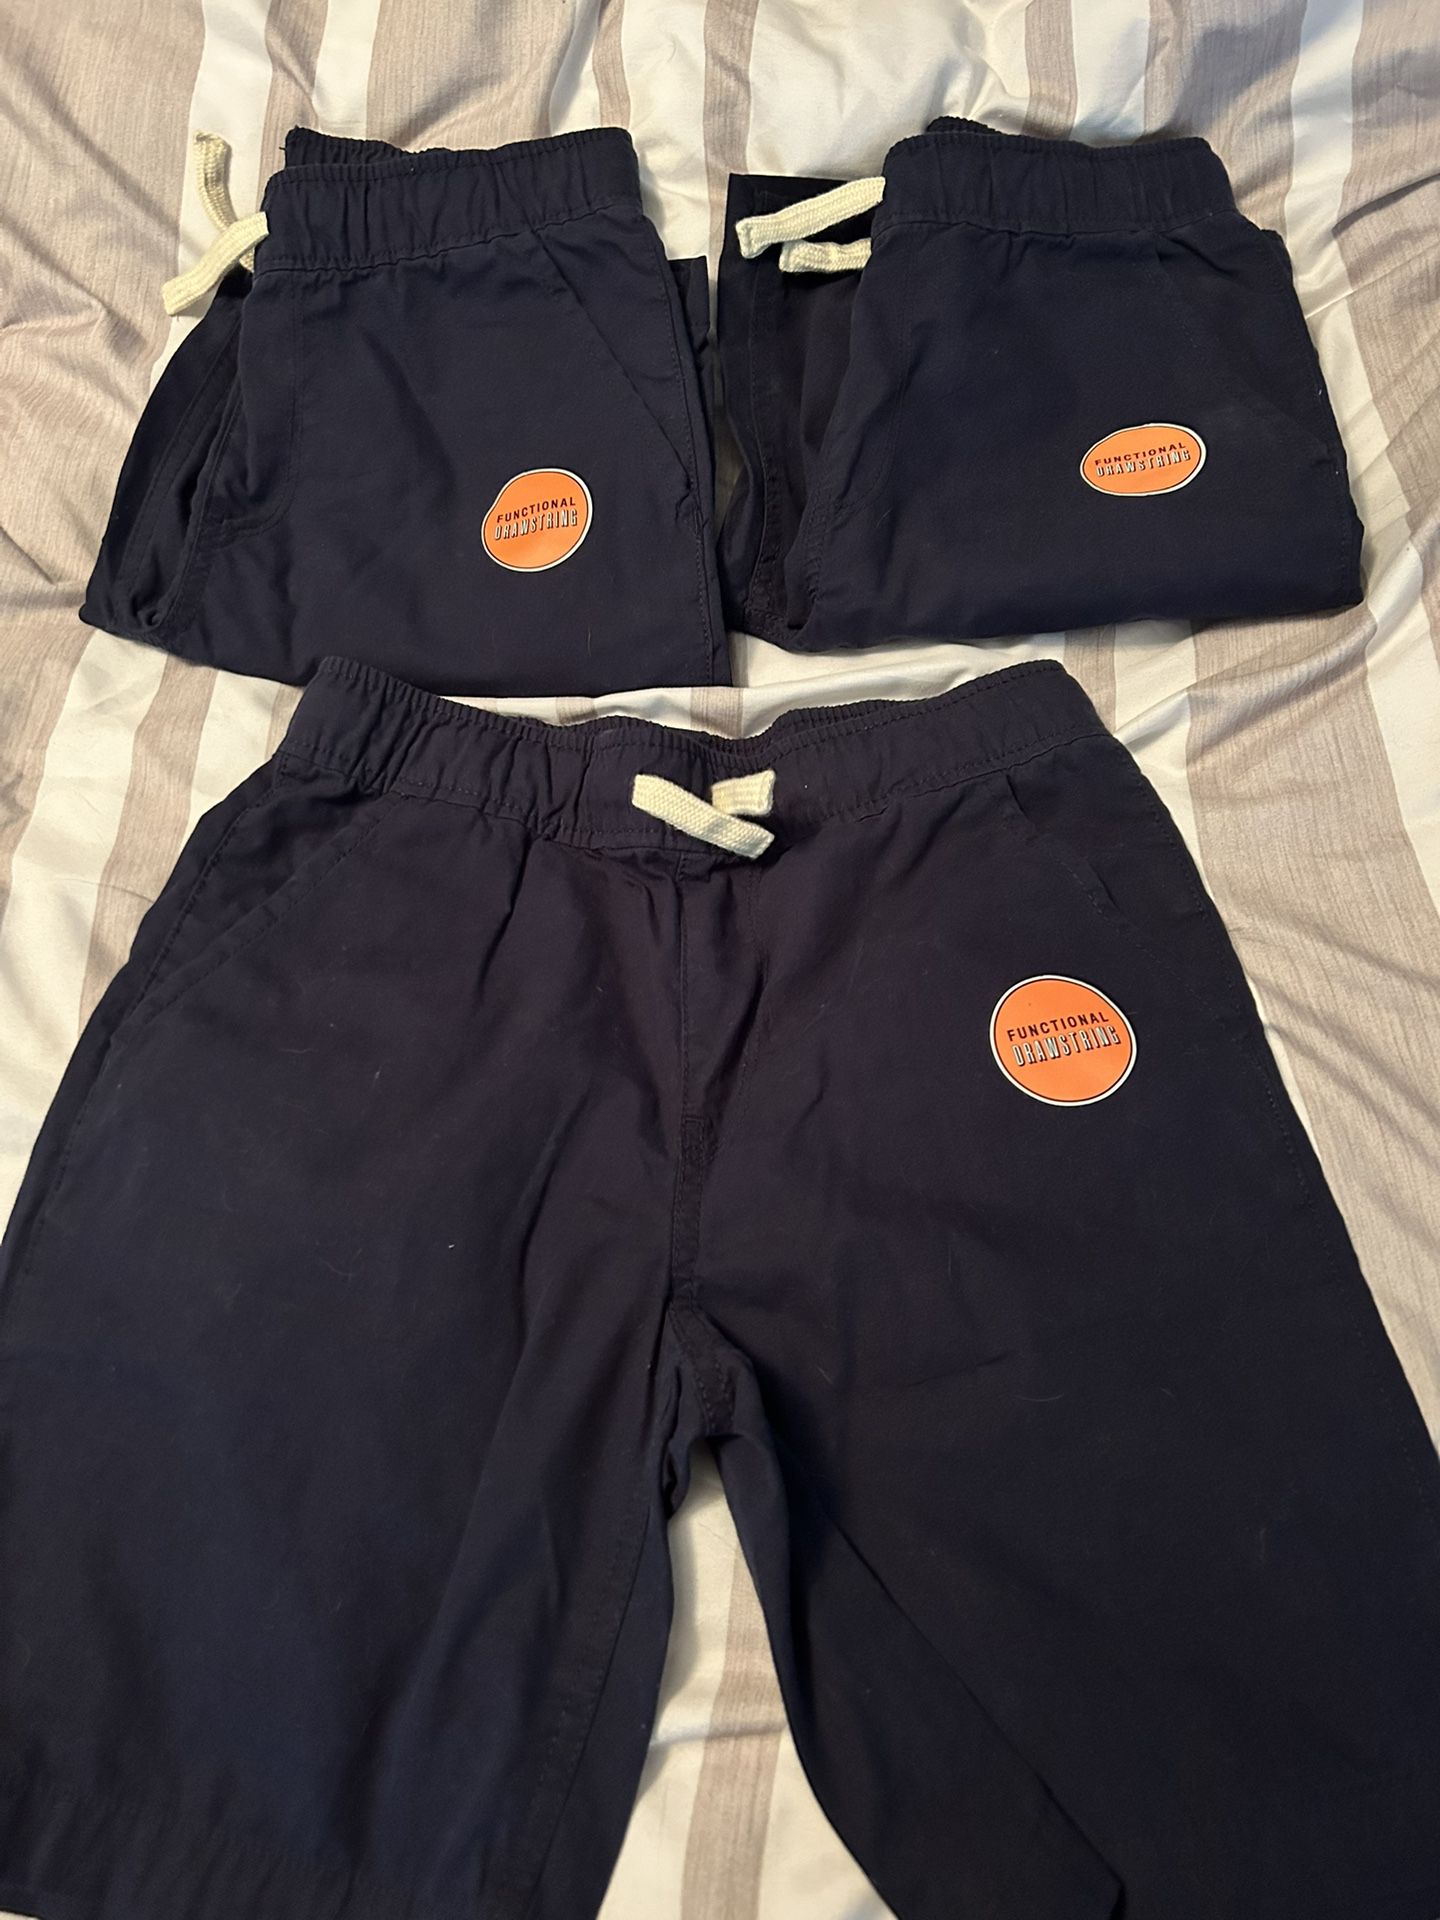 Boys NWT navy drawstring waist uniform shorts 8 Husky (3 pairs)